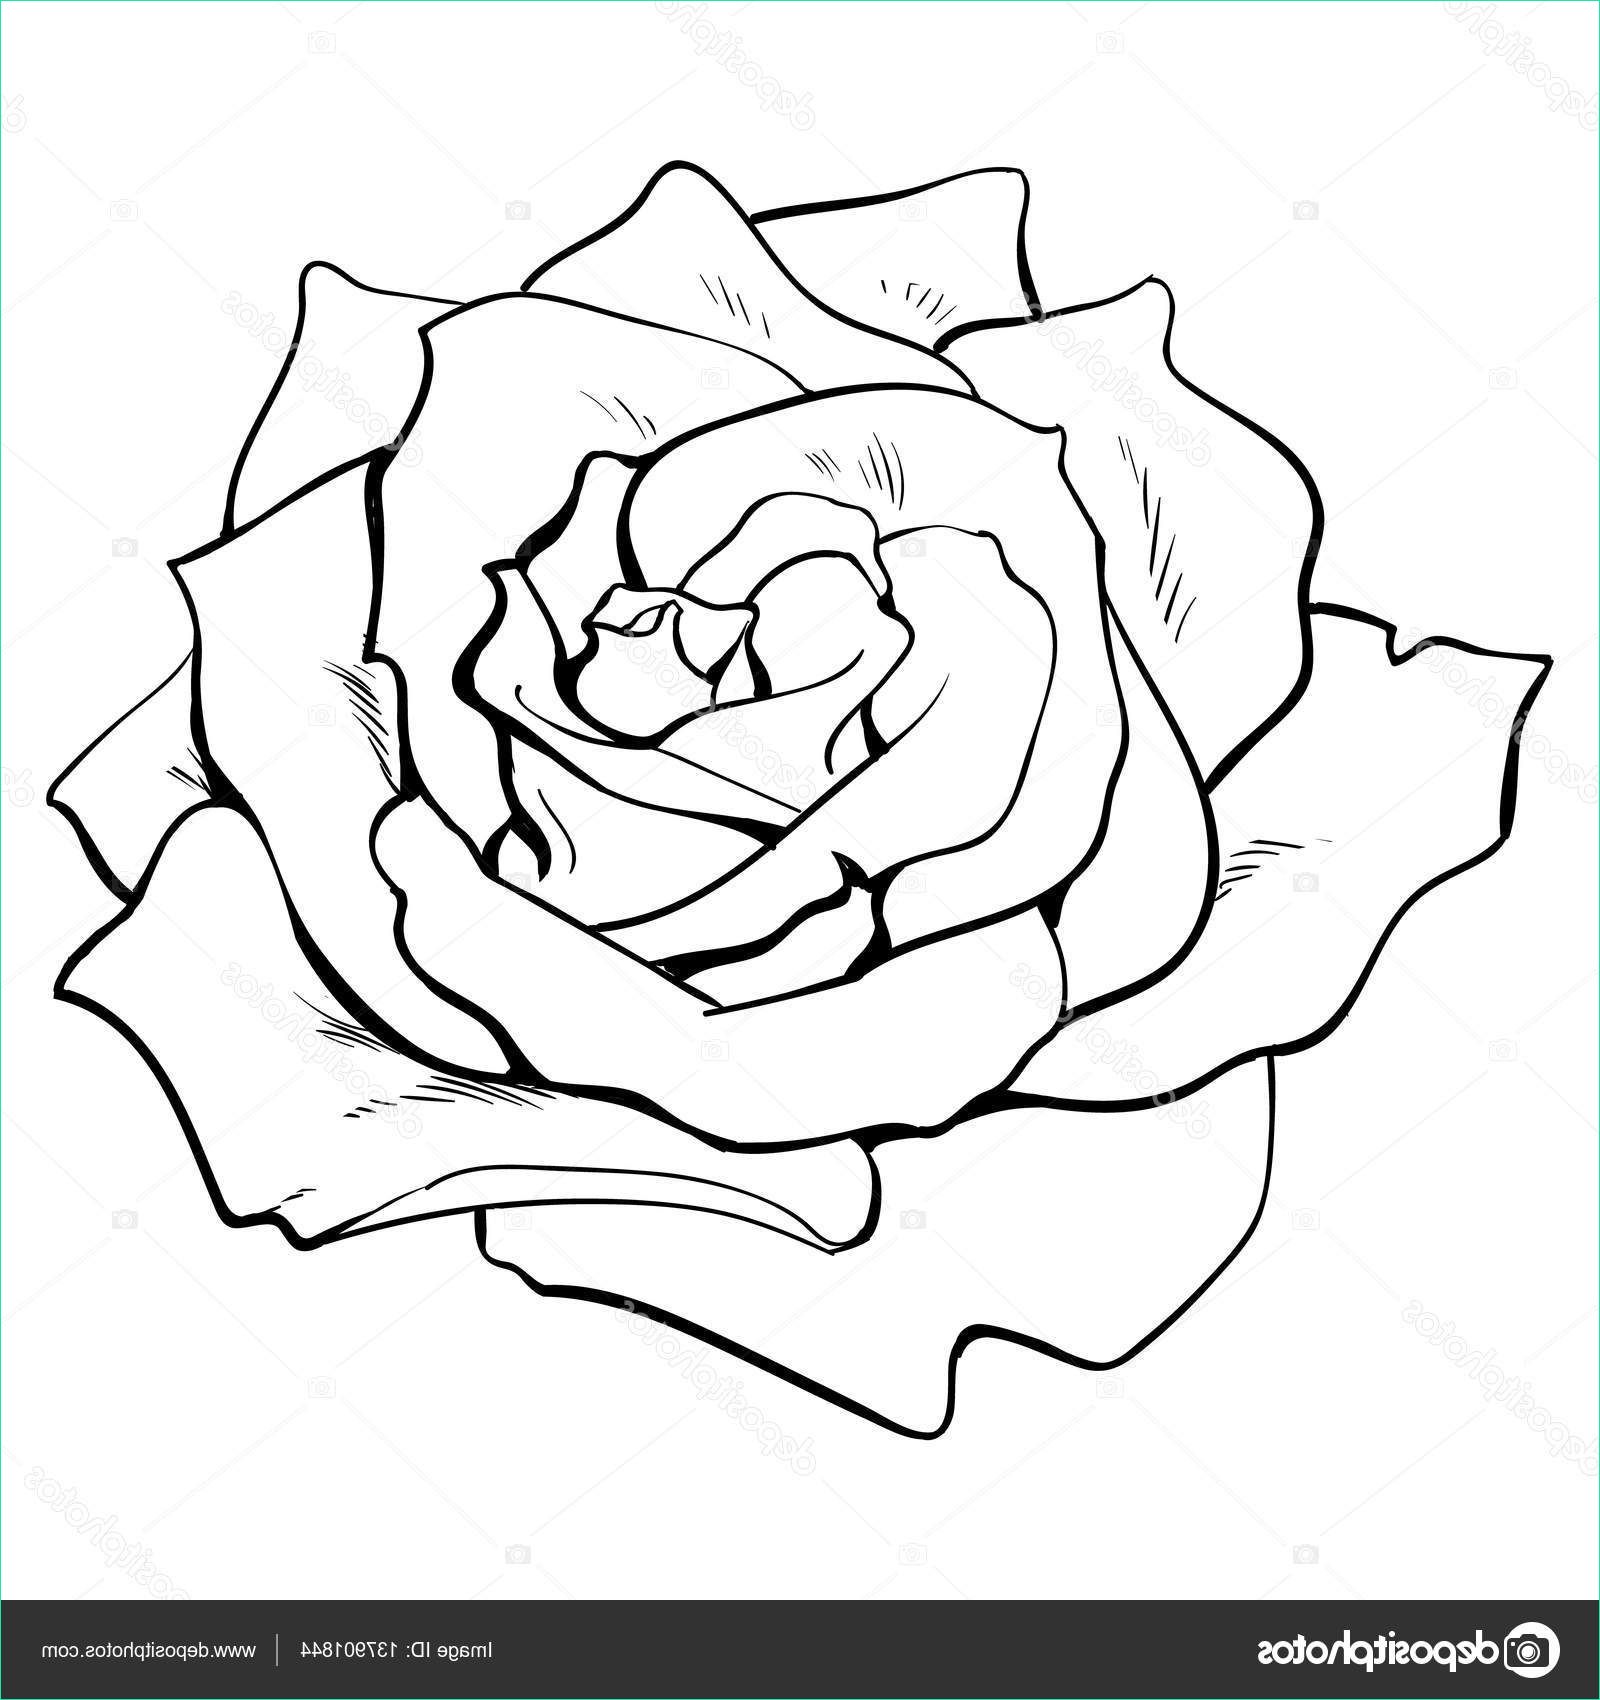 Dessins De Roses Inspirant Image Deep Contour Rose top View isolated Sketch Vector